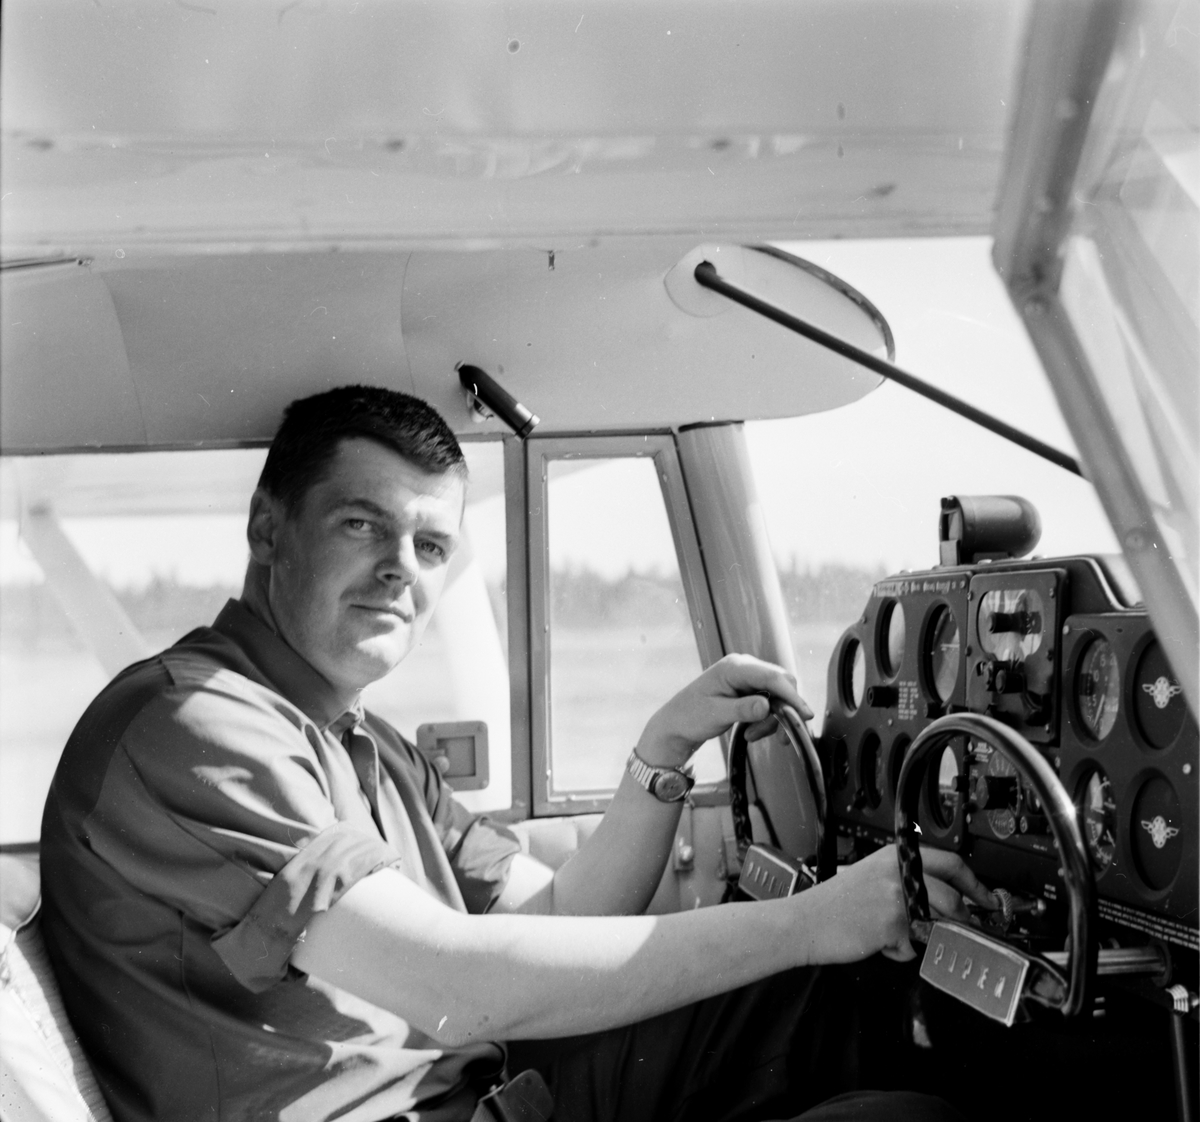 Laurin Roland,
Polis,flygare,
17 Maj 1966